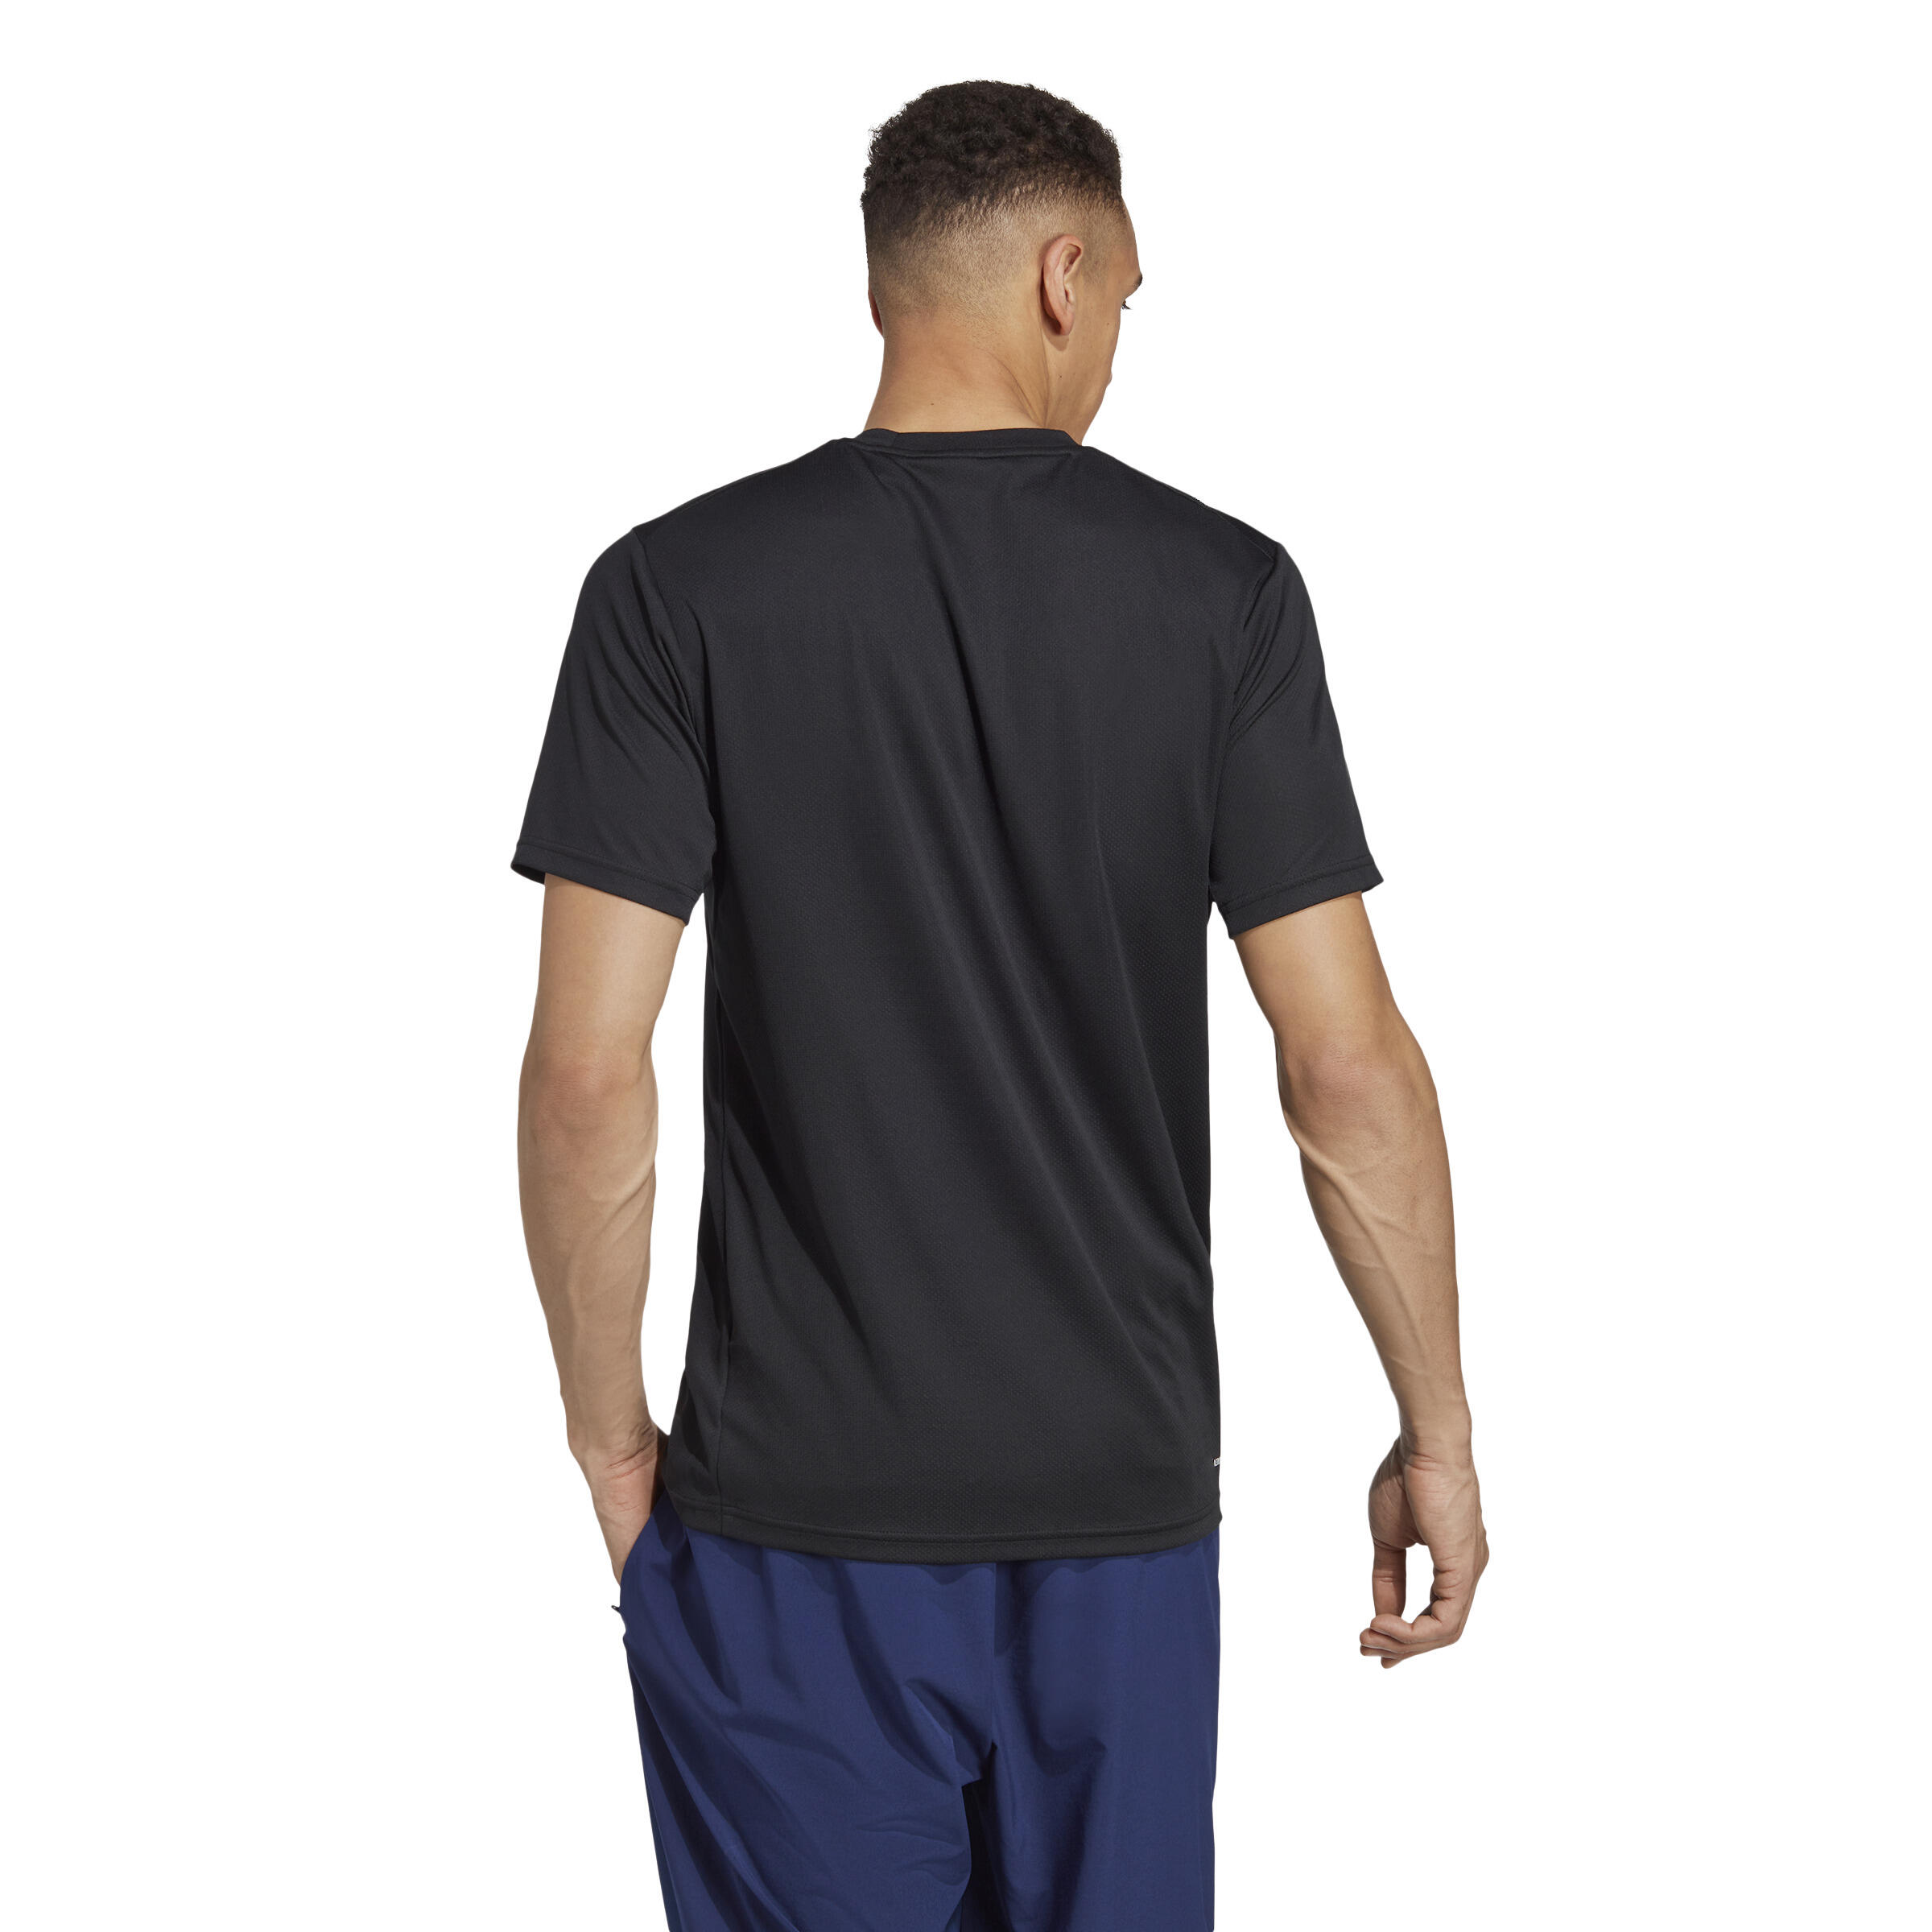 Men's Cardio Fitness T-Shirt - Black 3/7